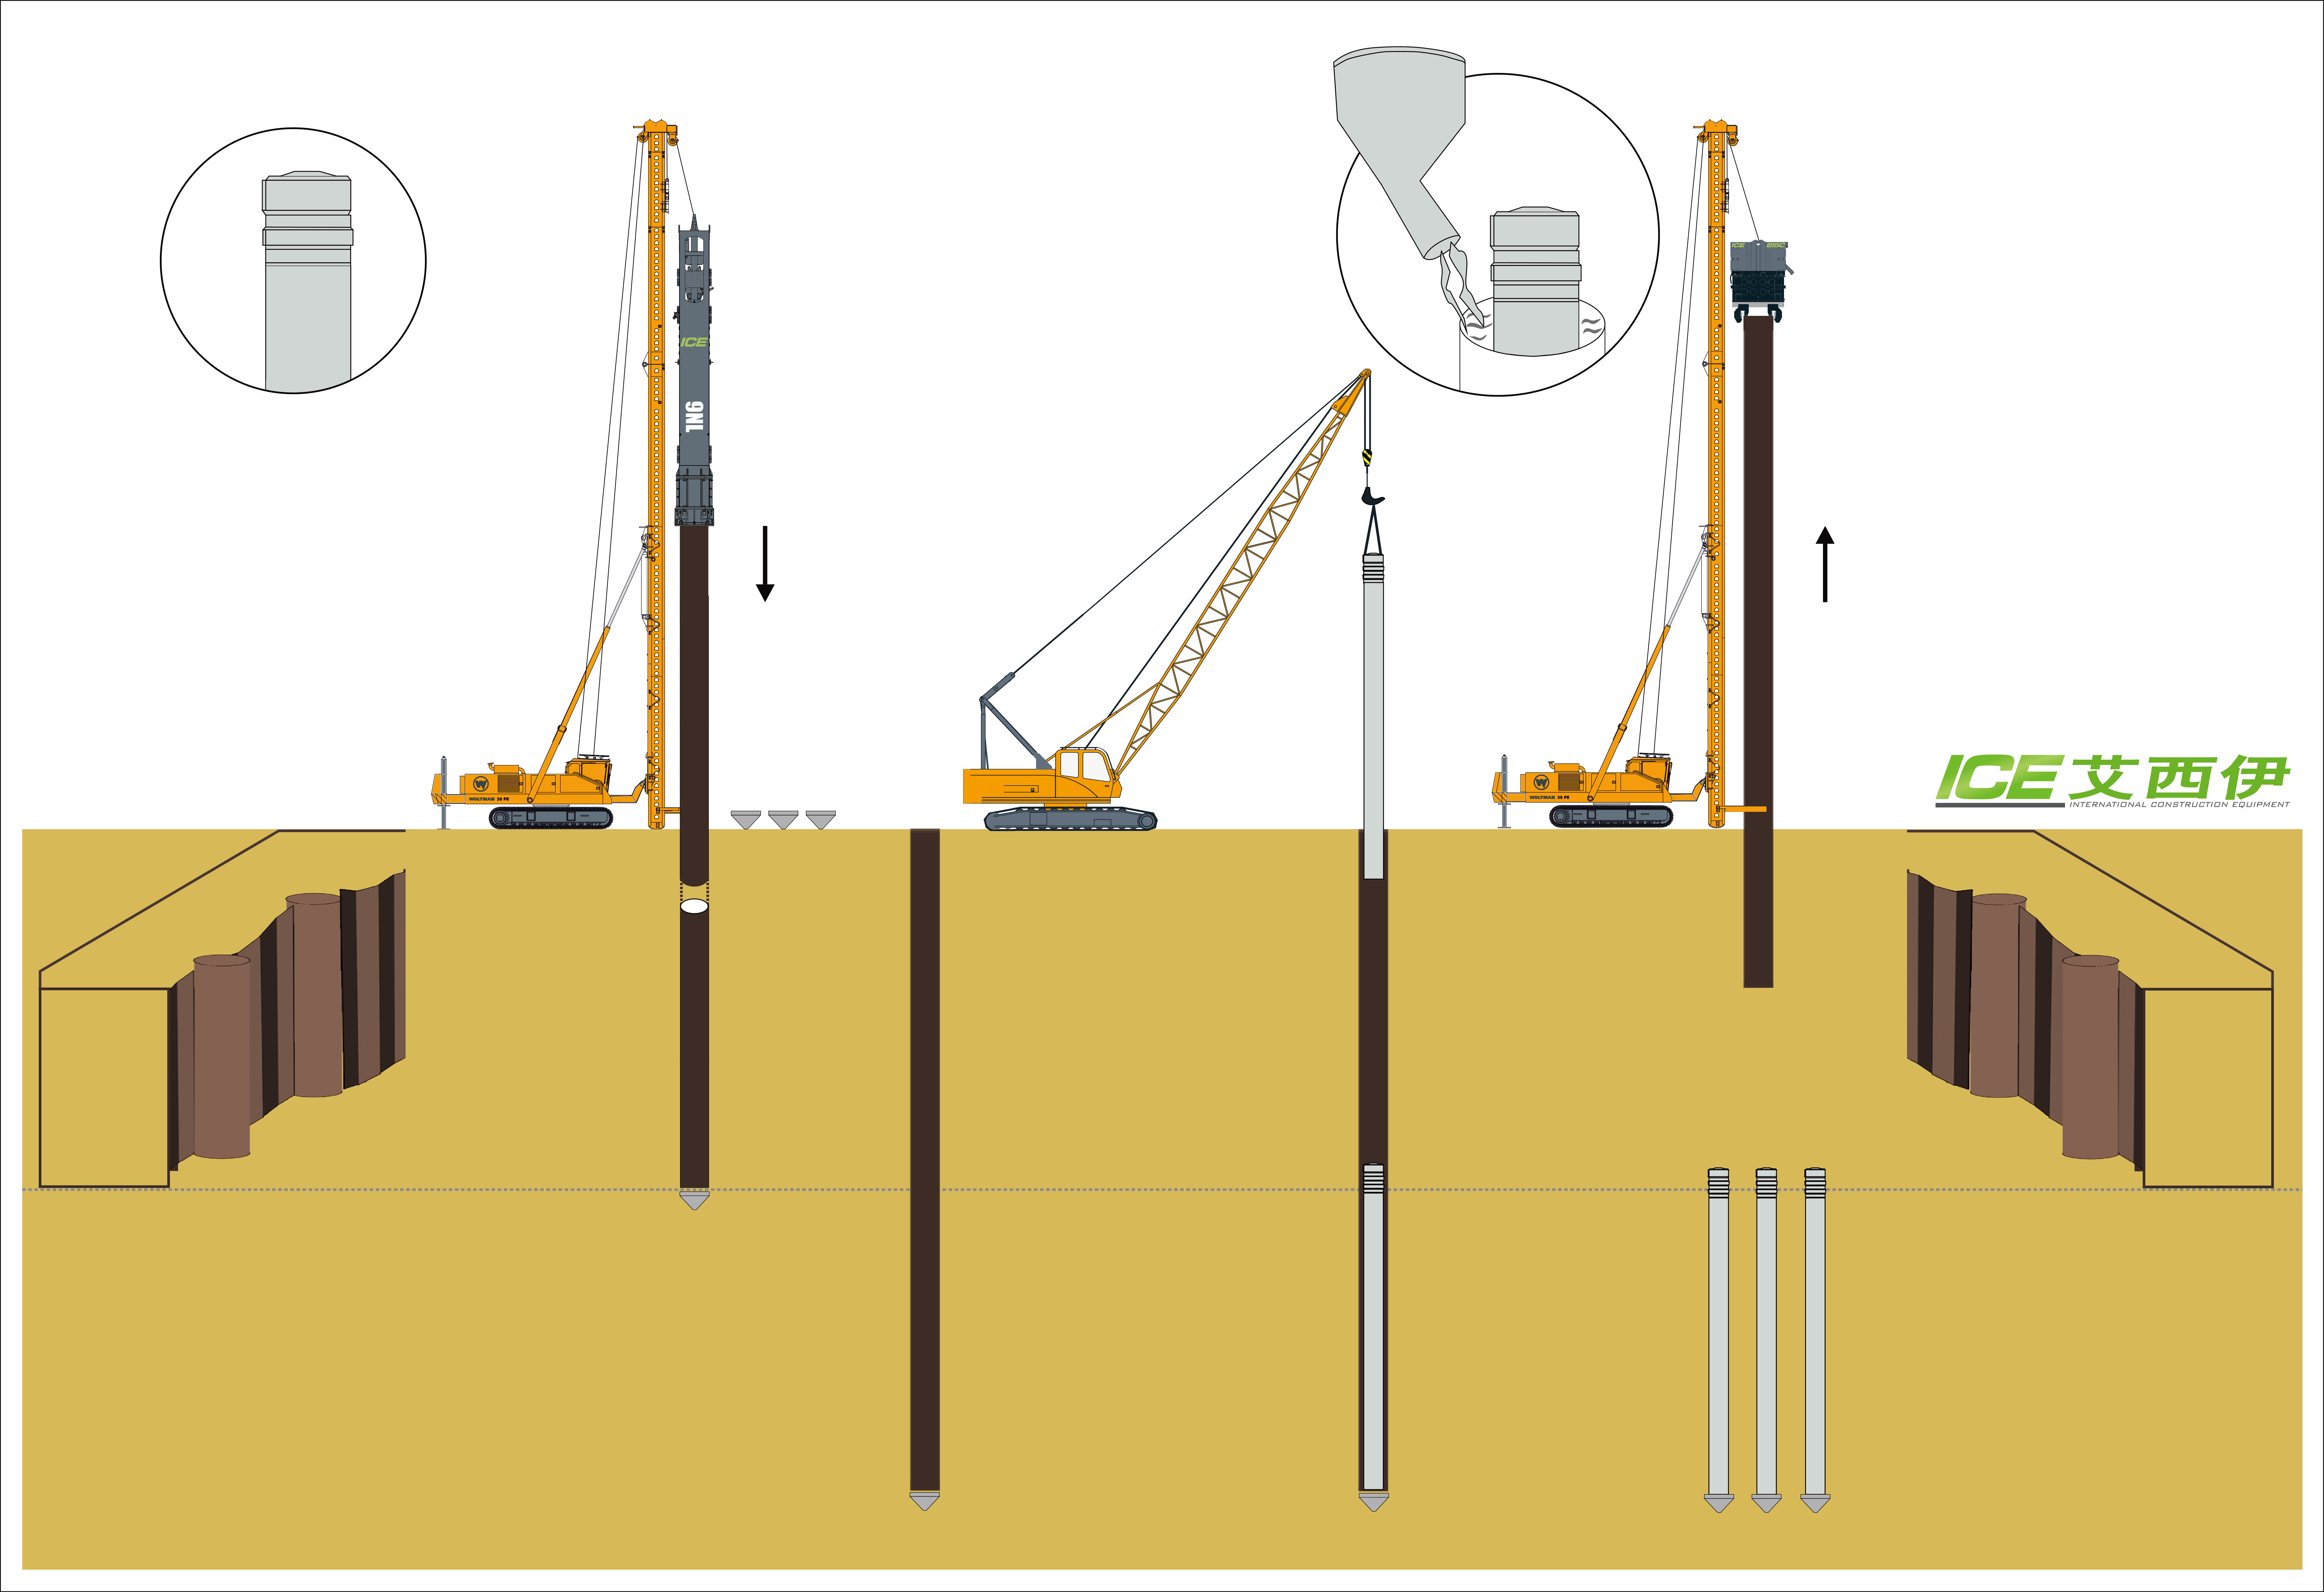 Dutch method for installation pre-fab concrete piles below excavation levels: the vibro combination 